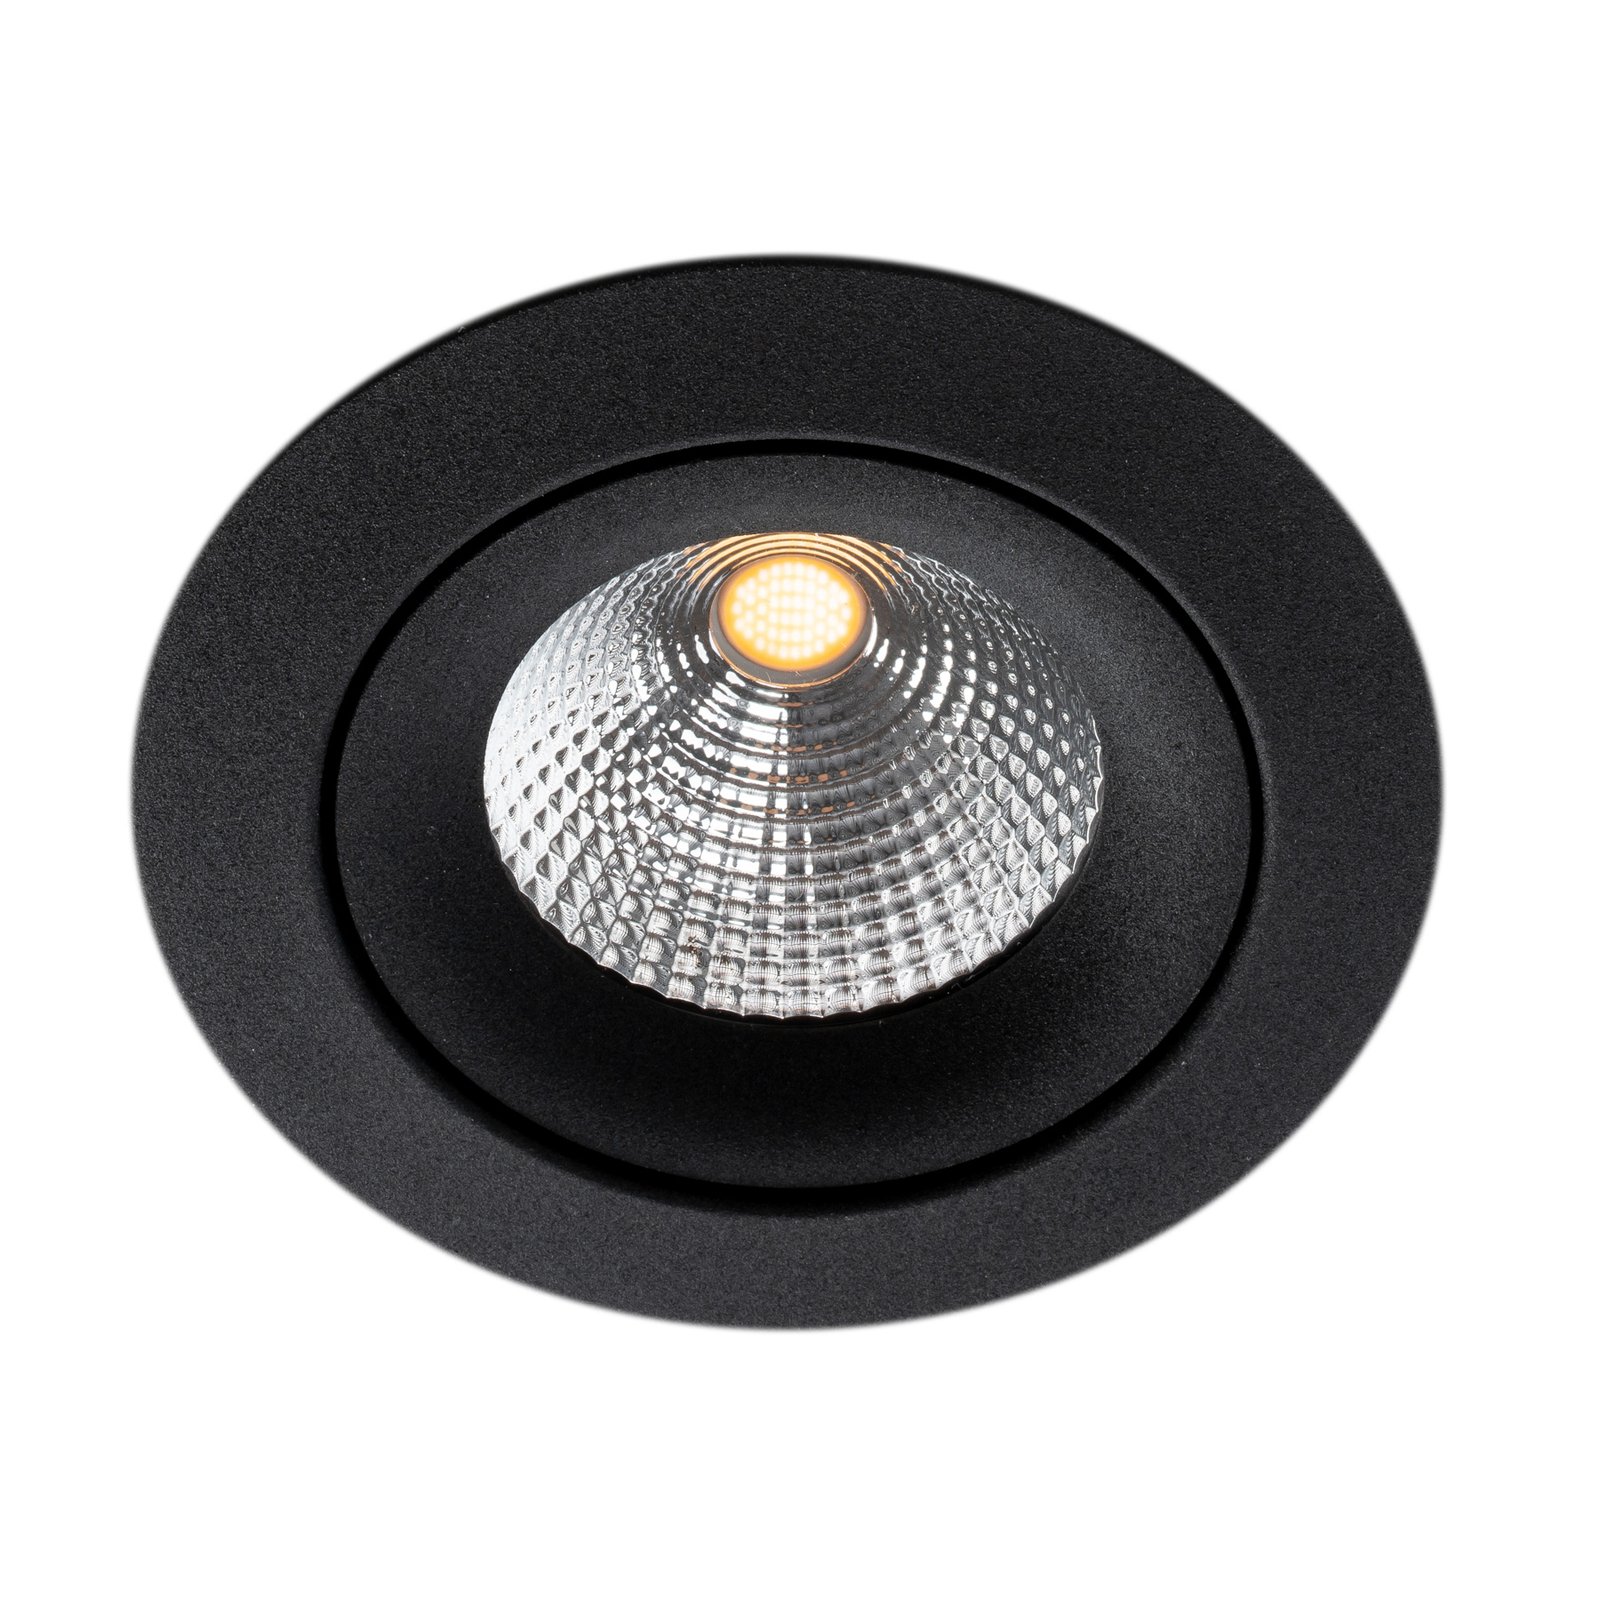 SLC One 360° SunLike lampe encastrée LED noir 930